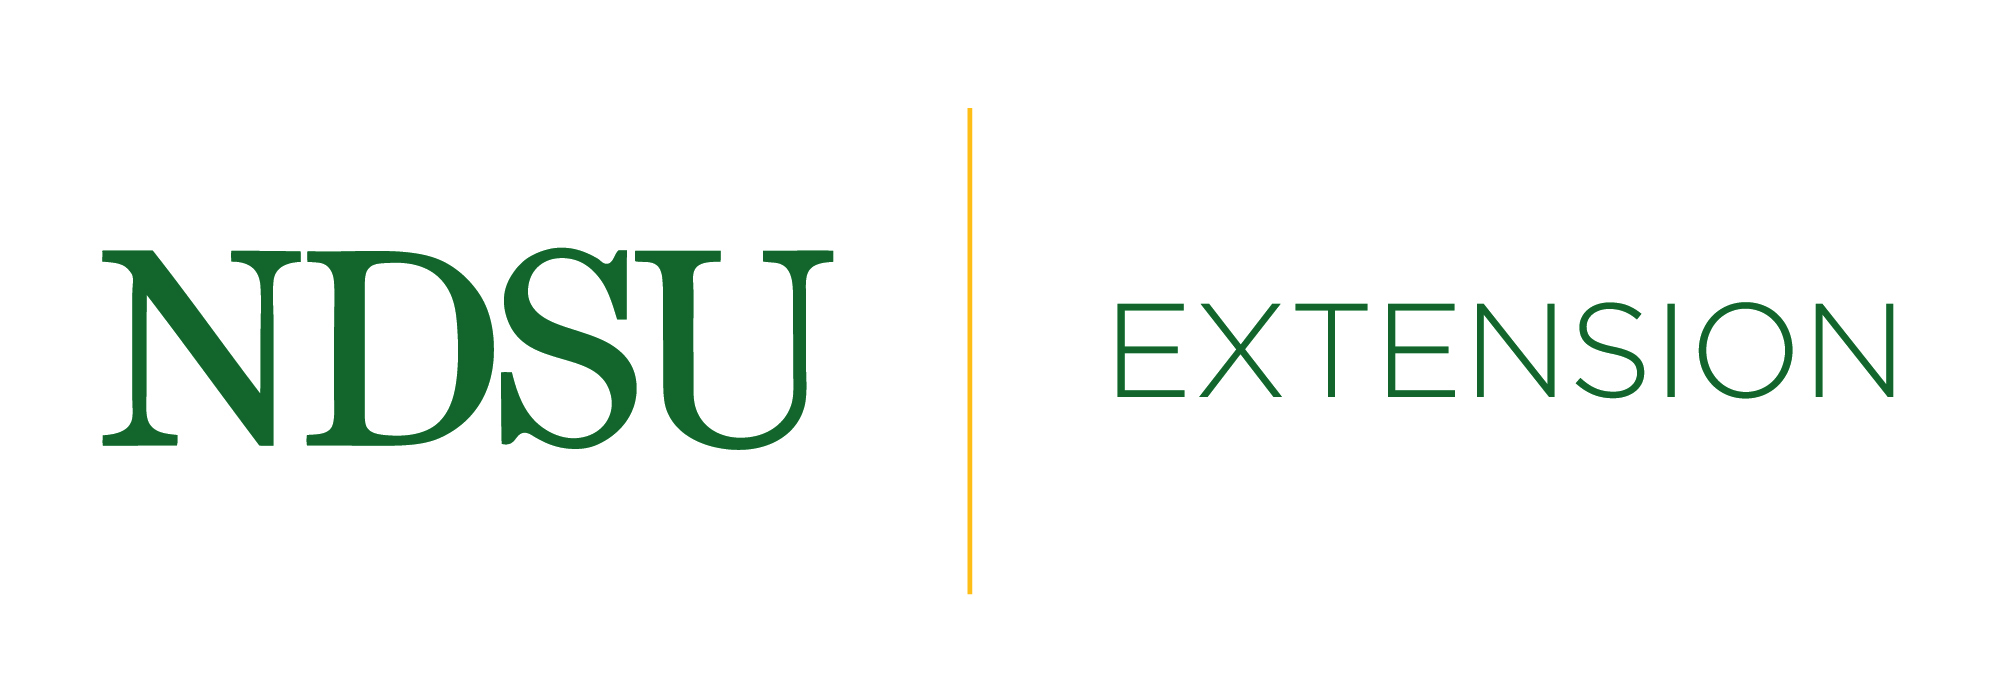 NDSU Extension Logo.jpg